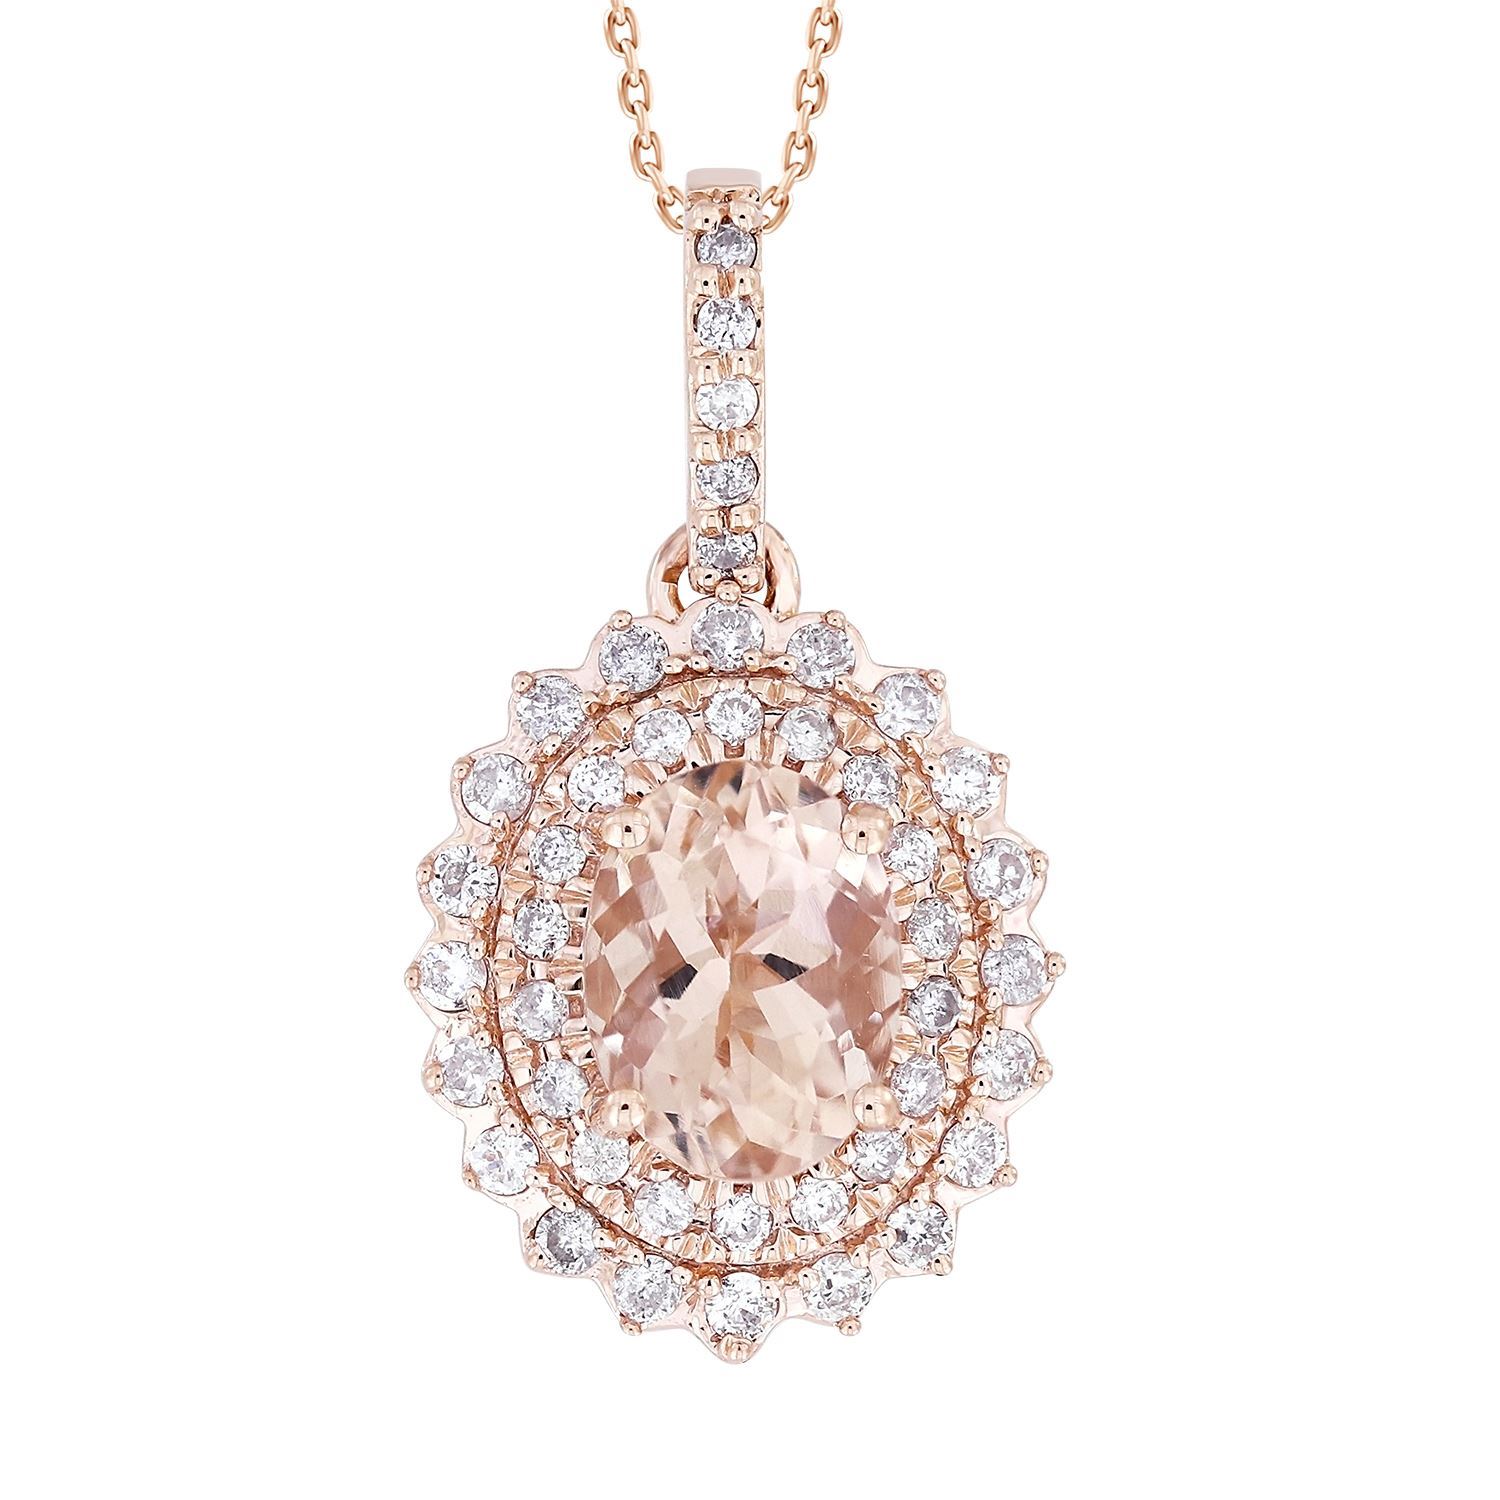 0017418_ladies-pendant-13-ct-roundpeach-morganite-diamond-10k-rose-gold-center-1-18.jpeg